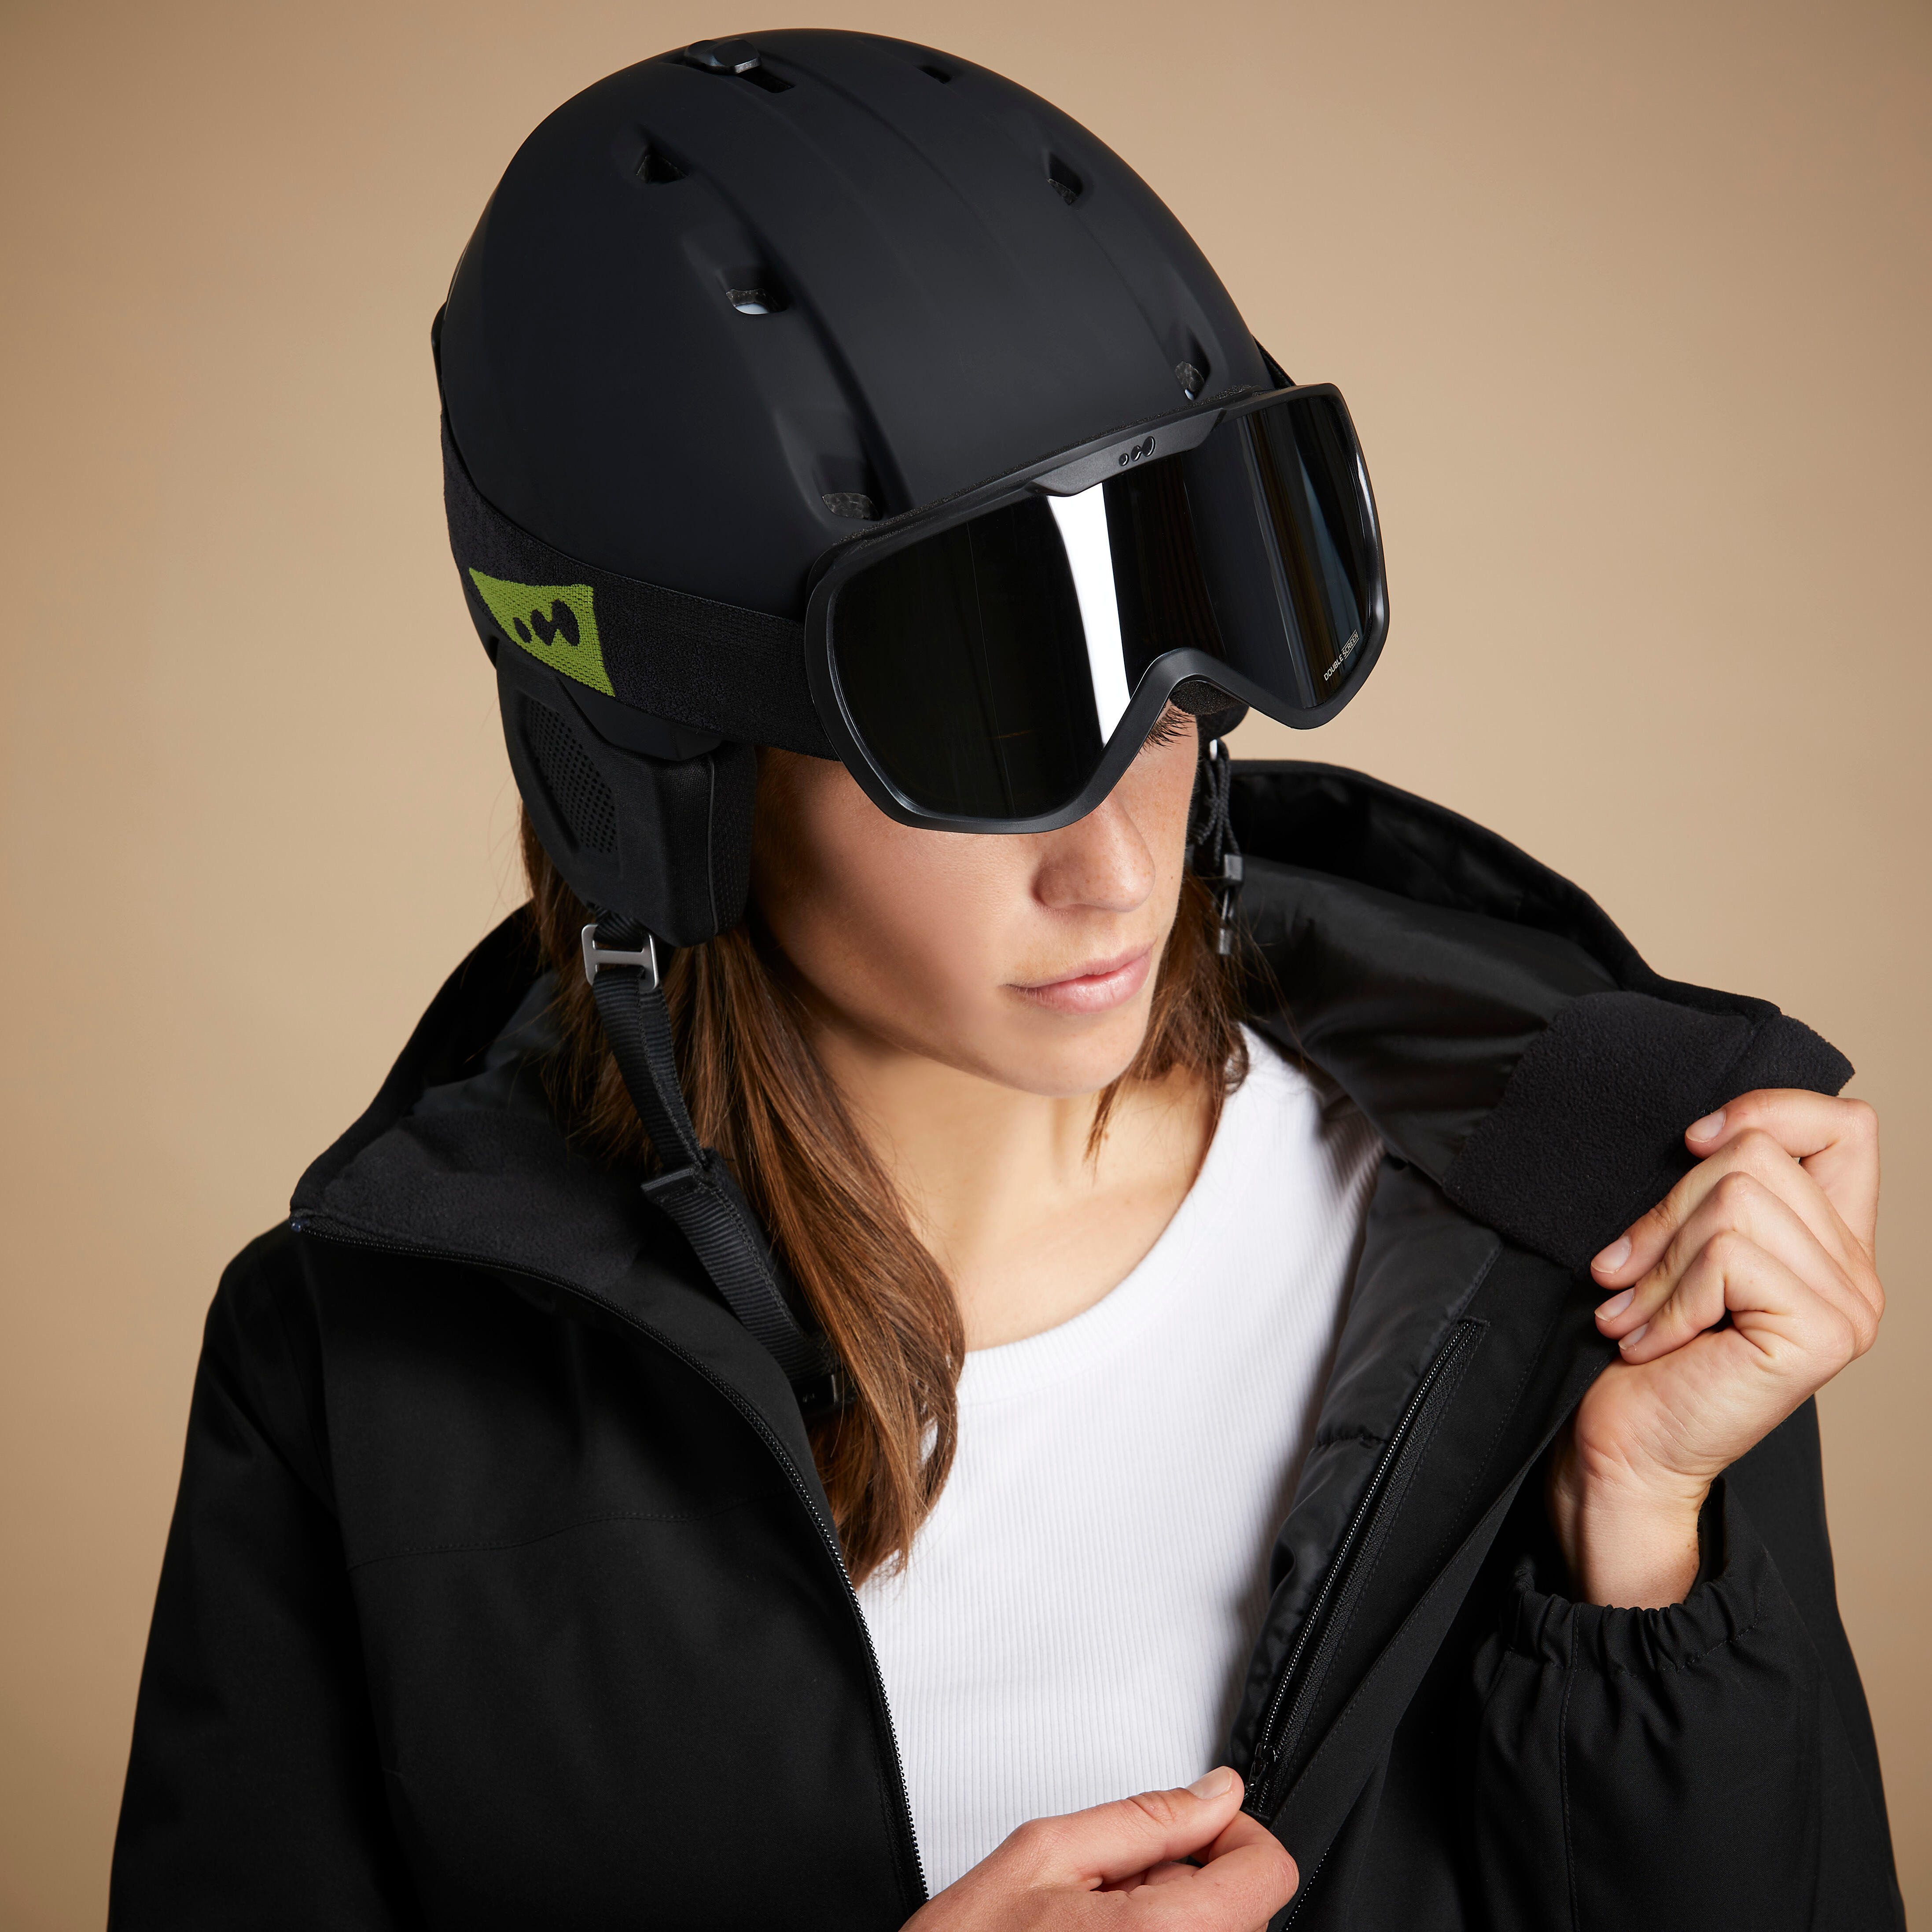 Manteau de ski femme – 100 noir - WEDZE